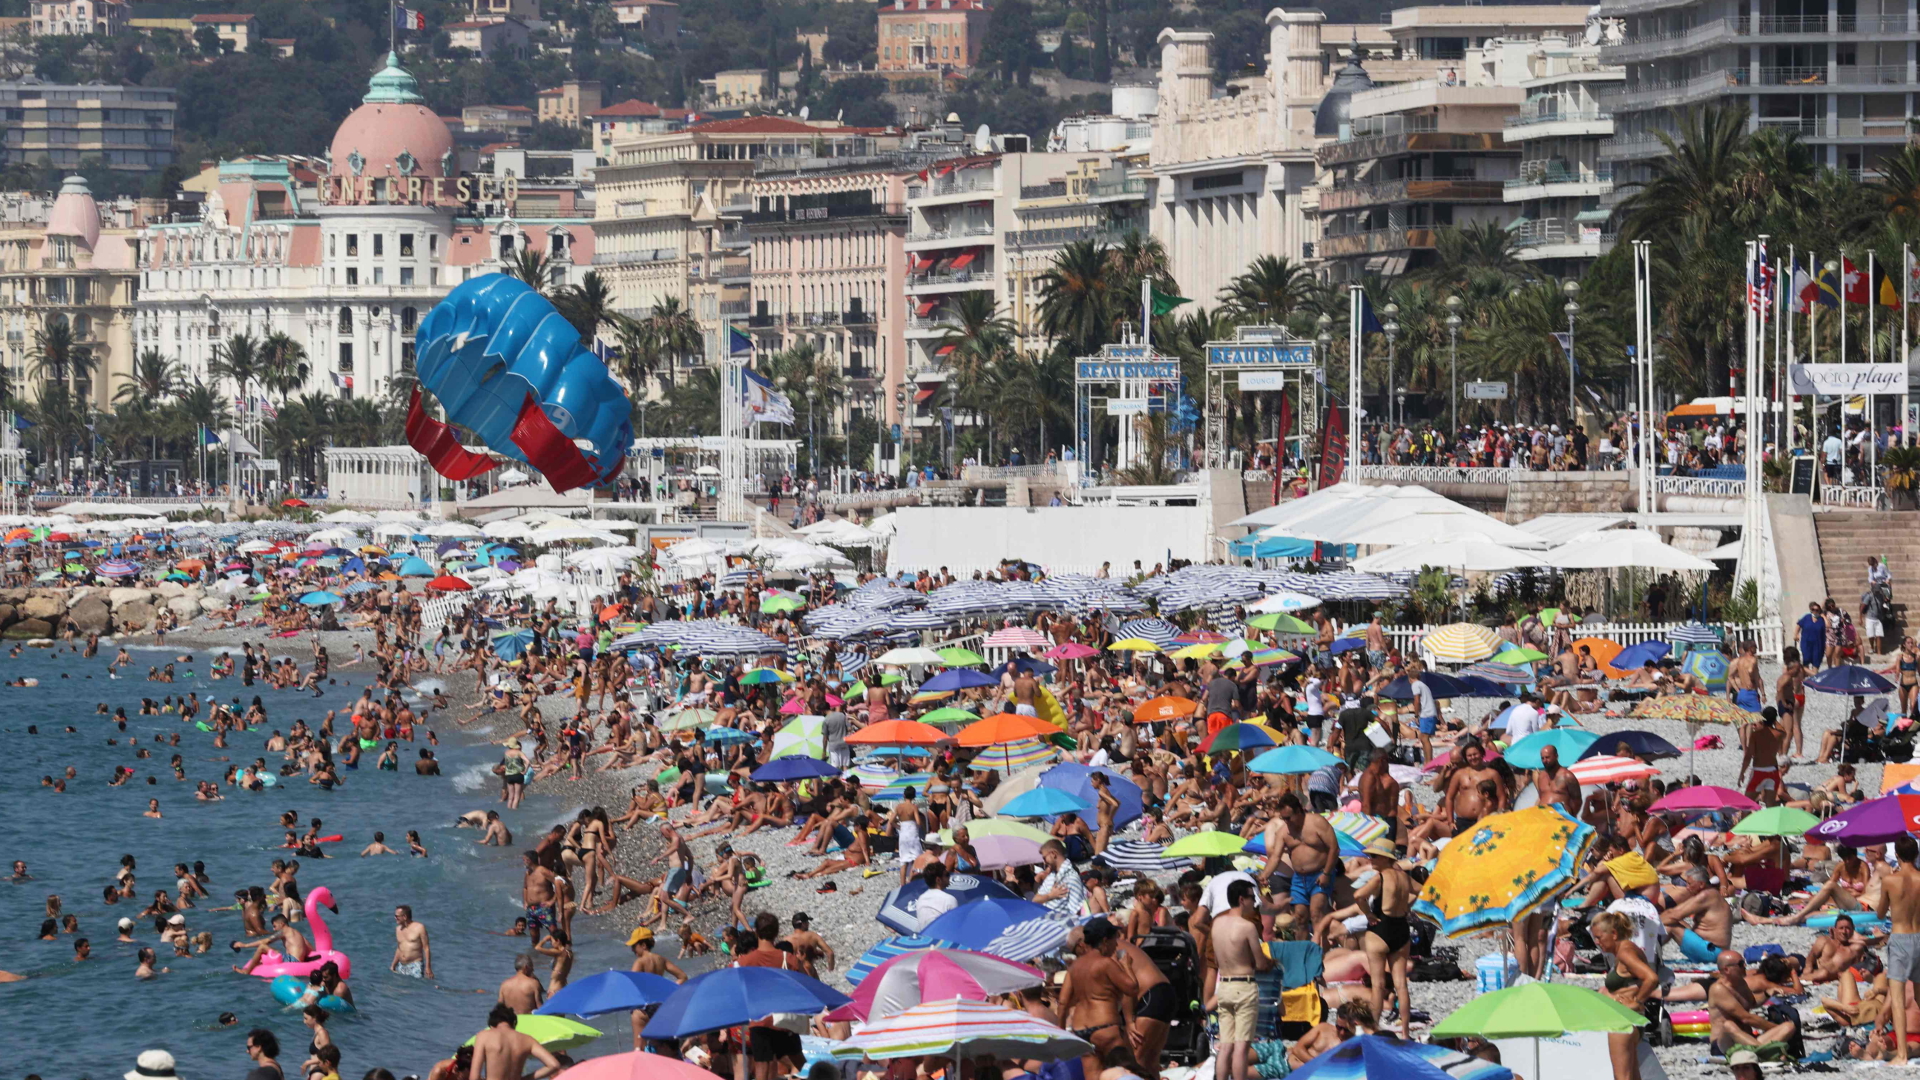 Badegäste am Strand entlang der "Promenade des Anglais" in Nizza | dpa